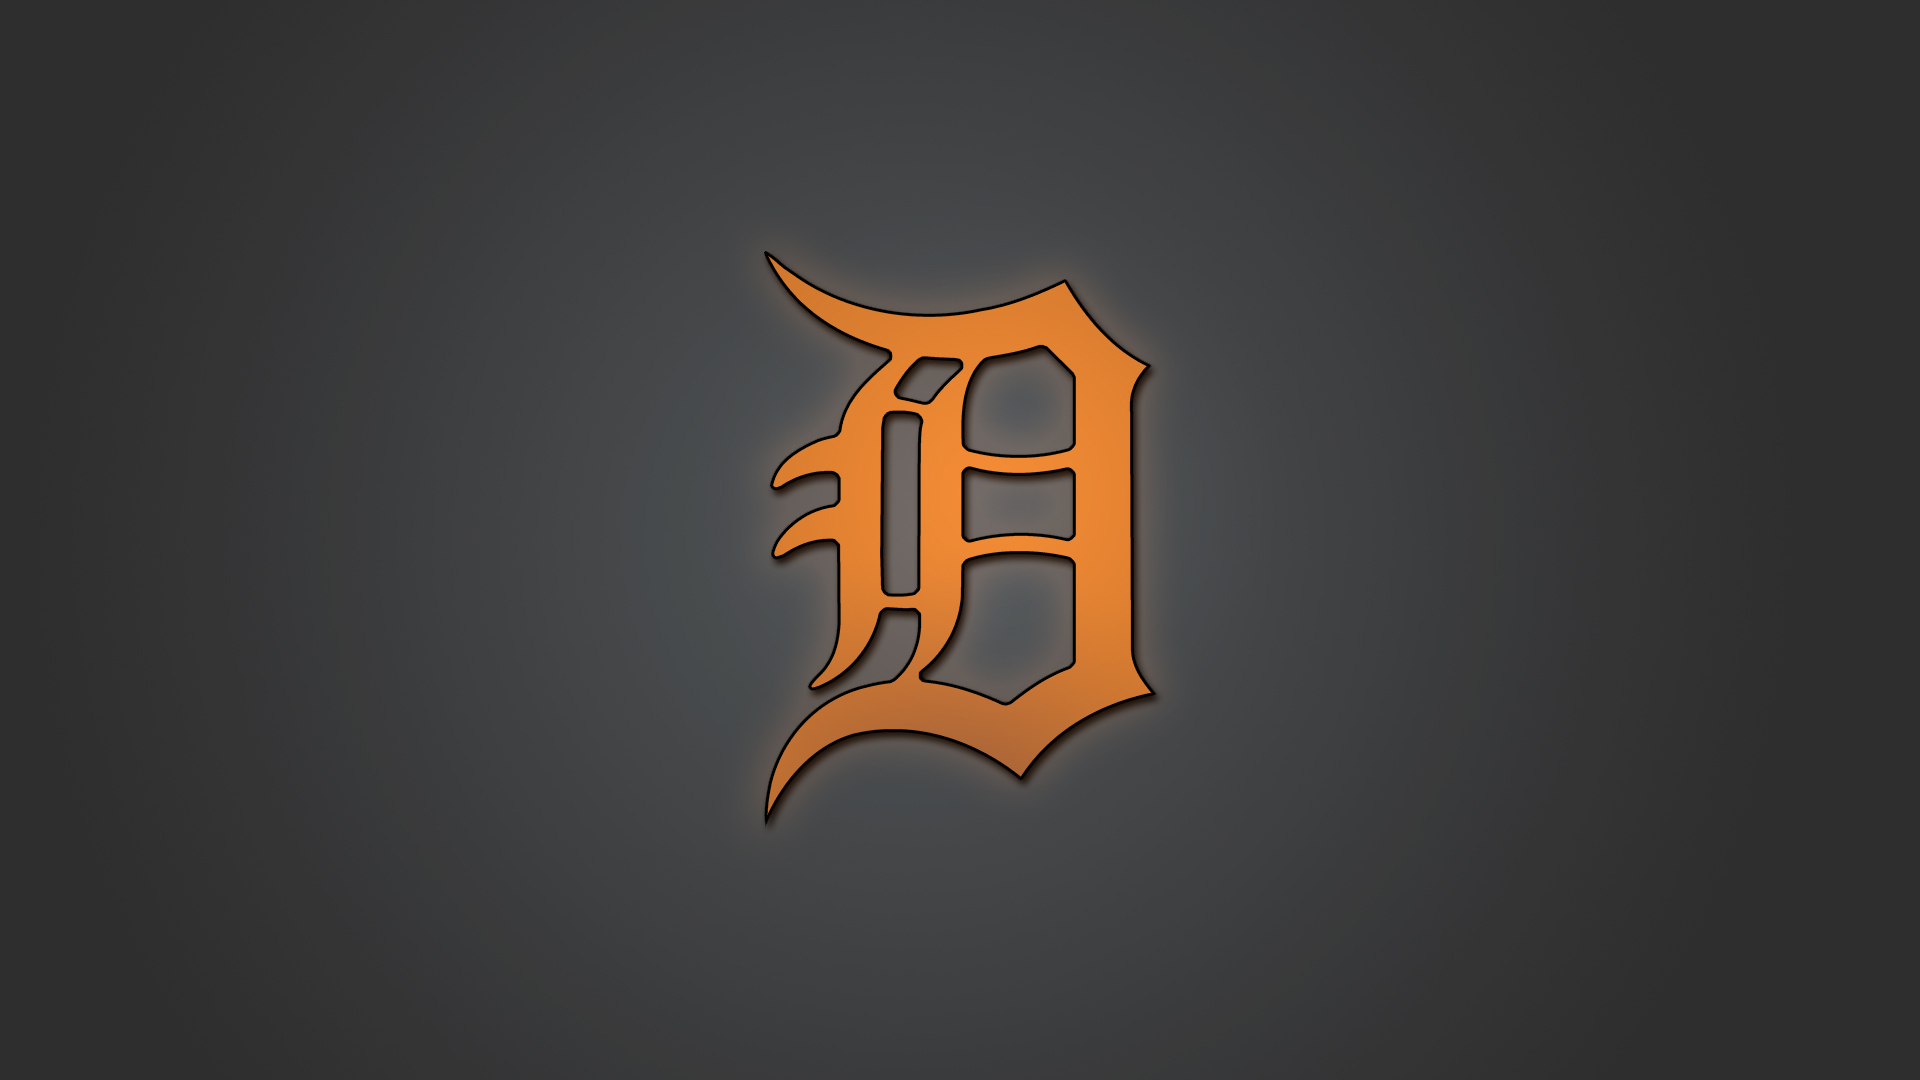 detroit tigers logo wallpaper free download in 1920x1080 px id6191